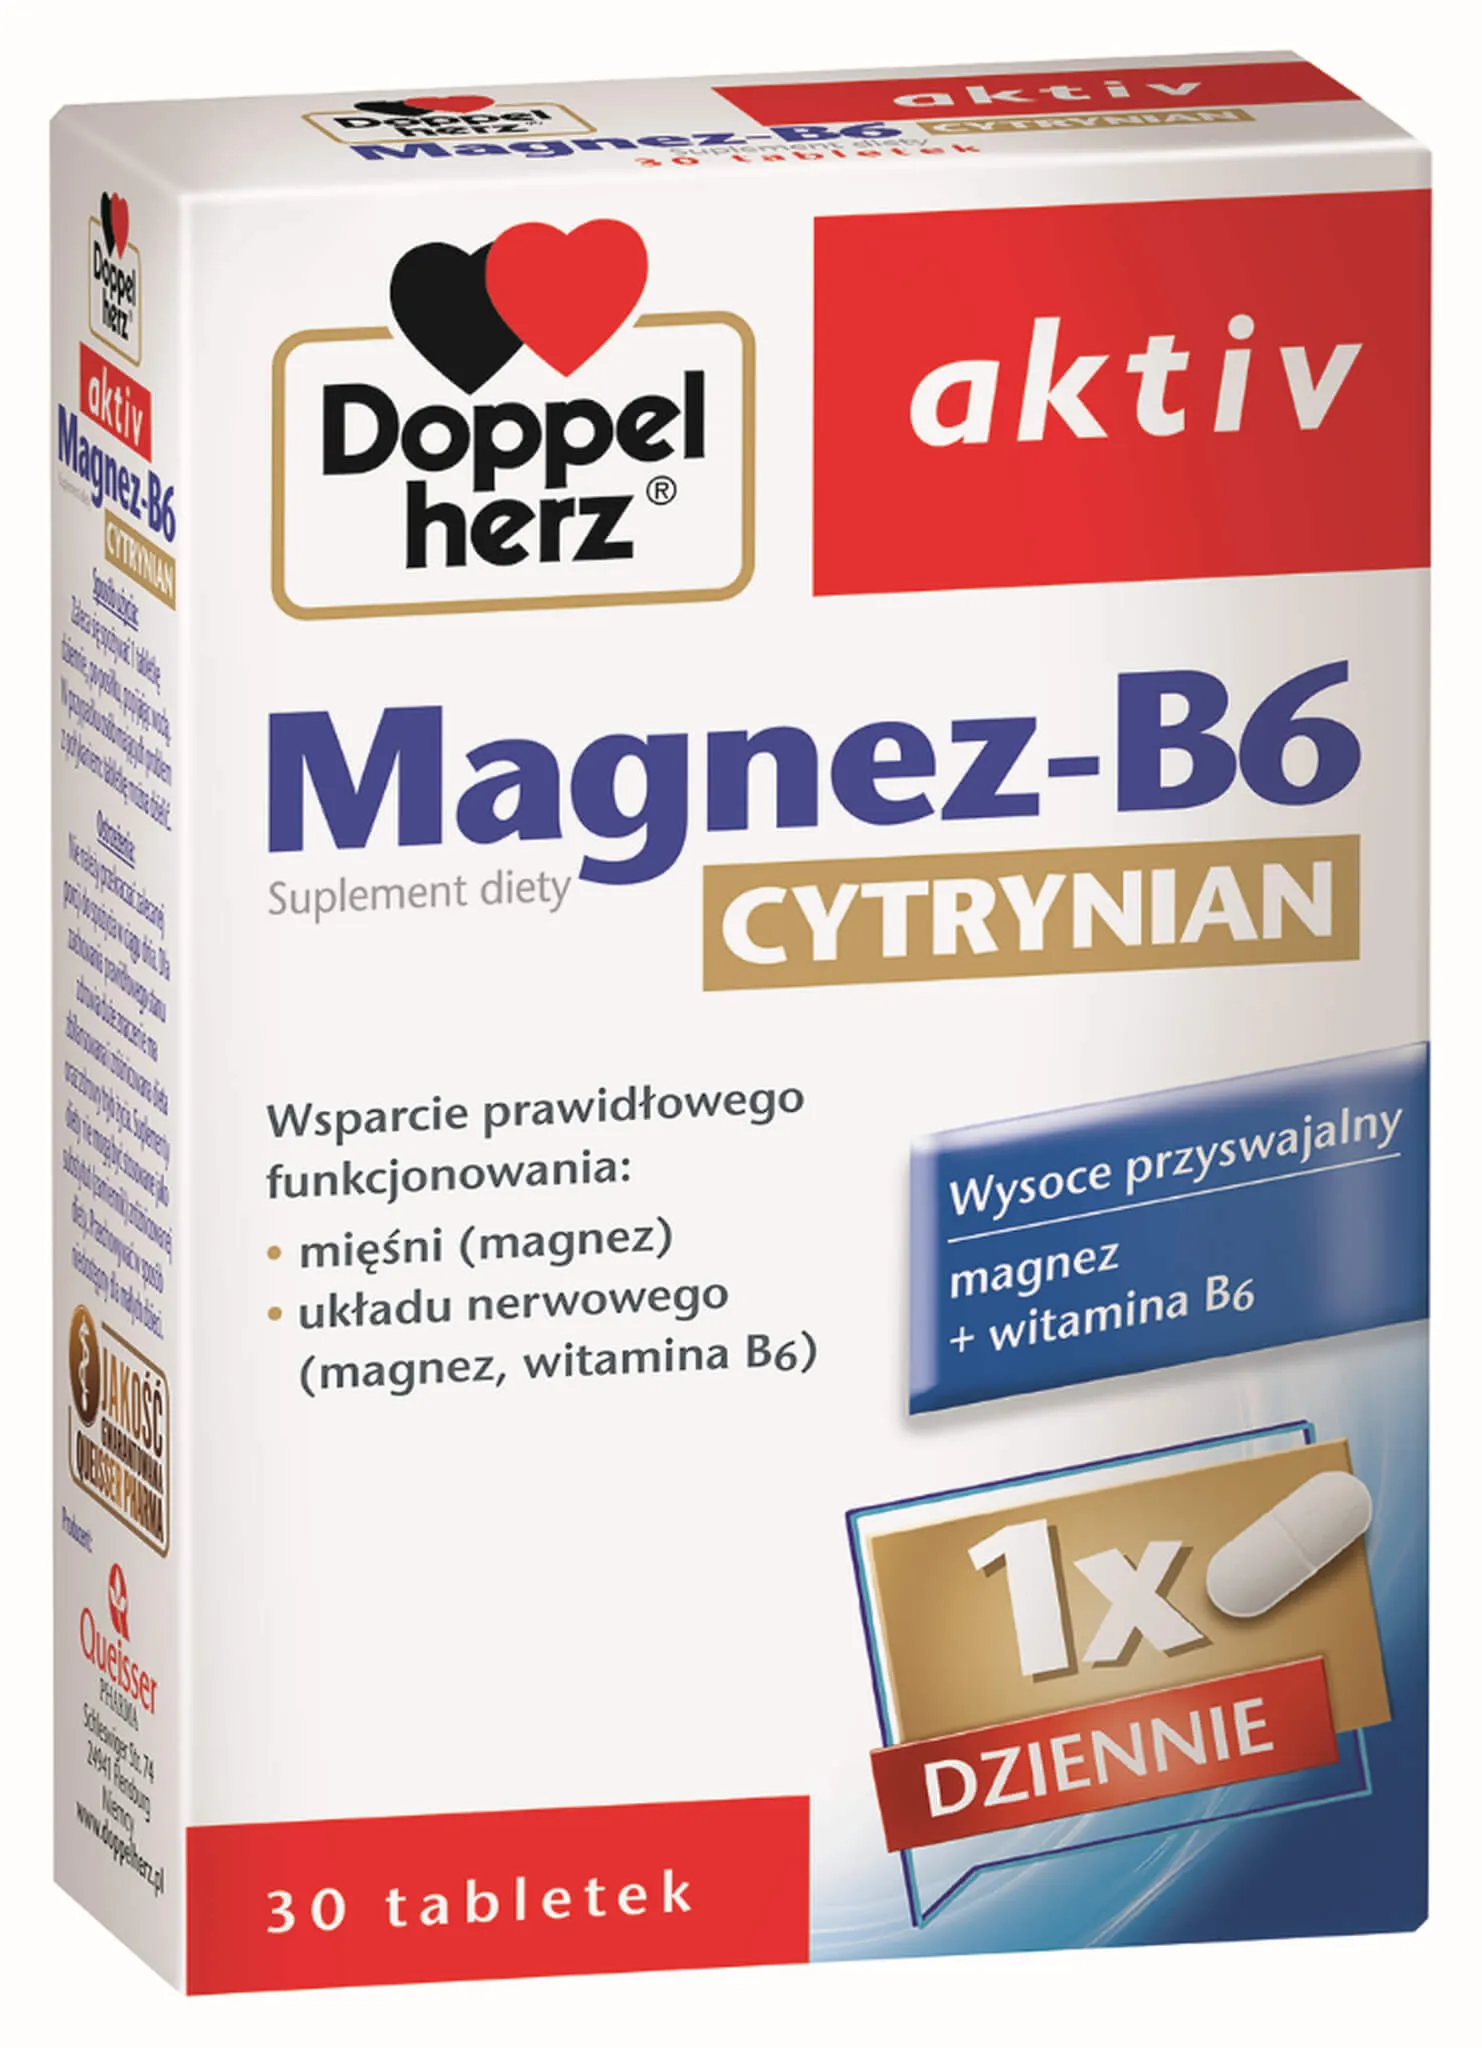 Doppelherz Aktiv Magnez-B6 Cytrynian, suplement diety, 30 tabletek